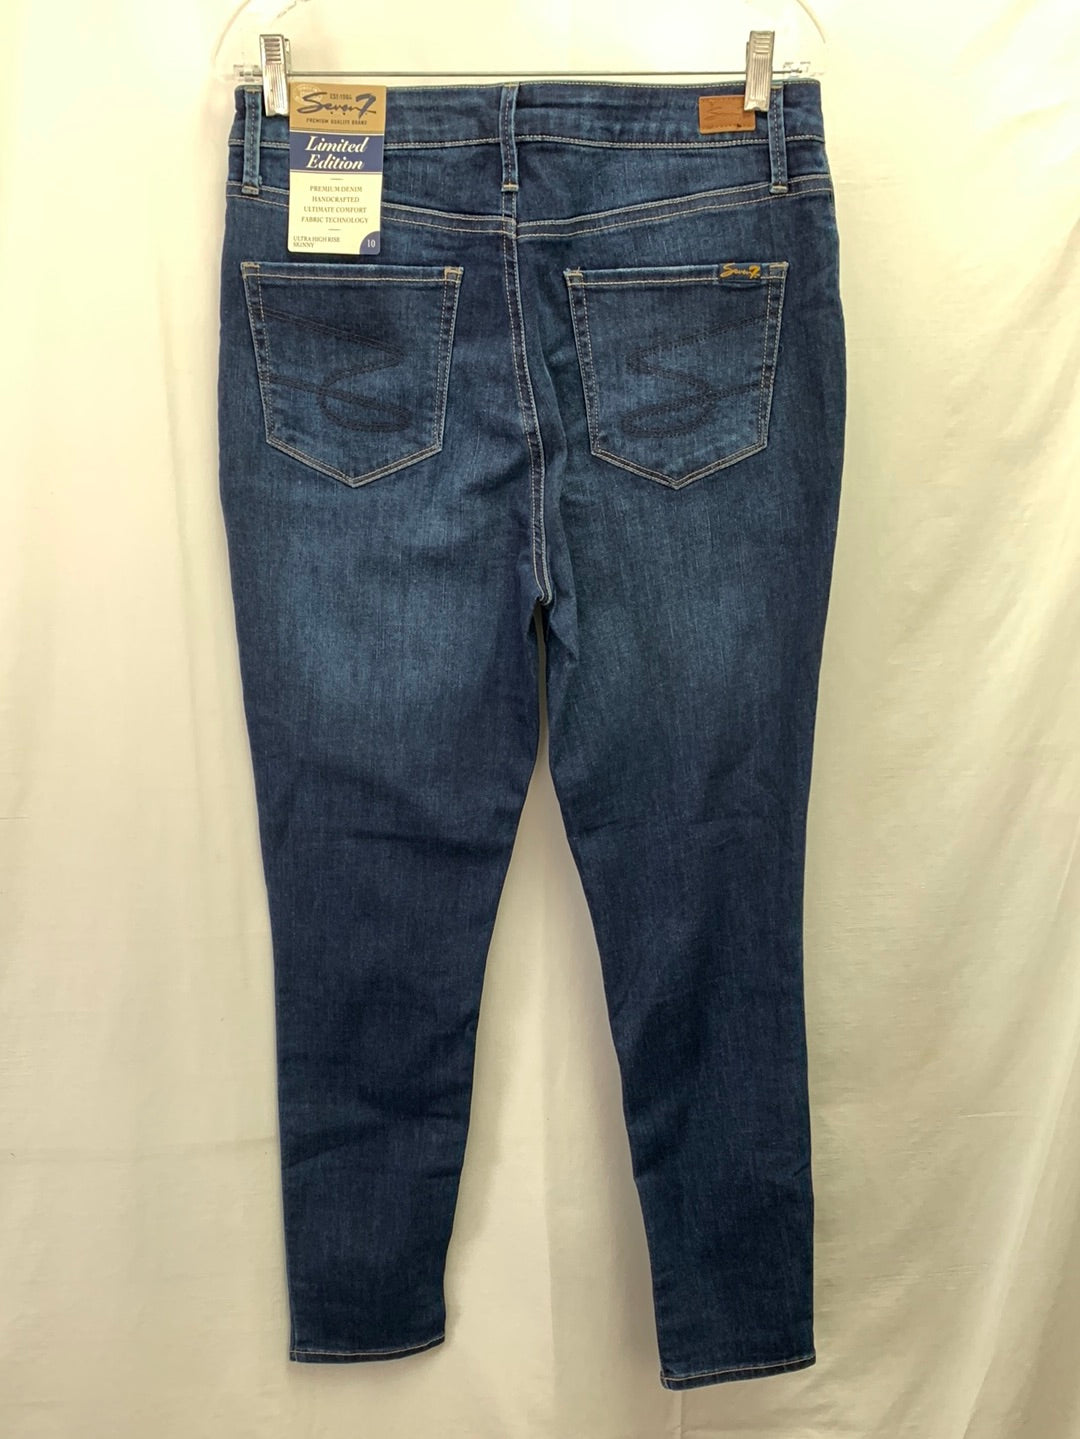 NWT - SEVEN7 dark wash Ultra High Rise Skinny Jeans - Size 10